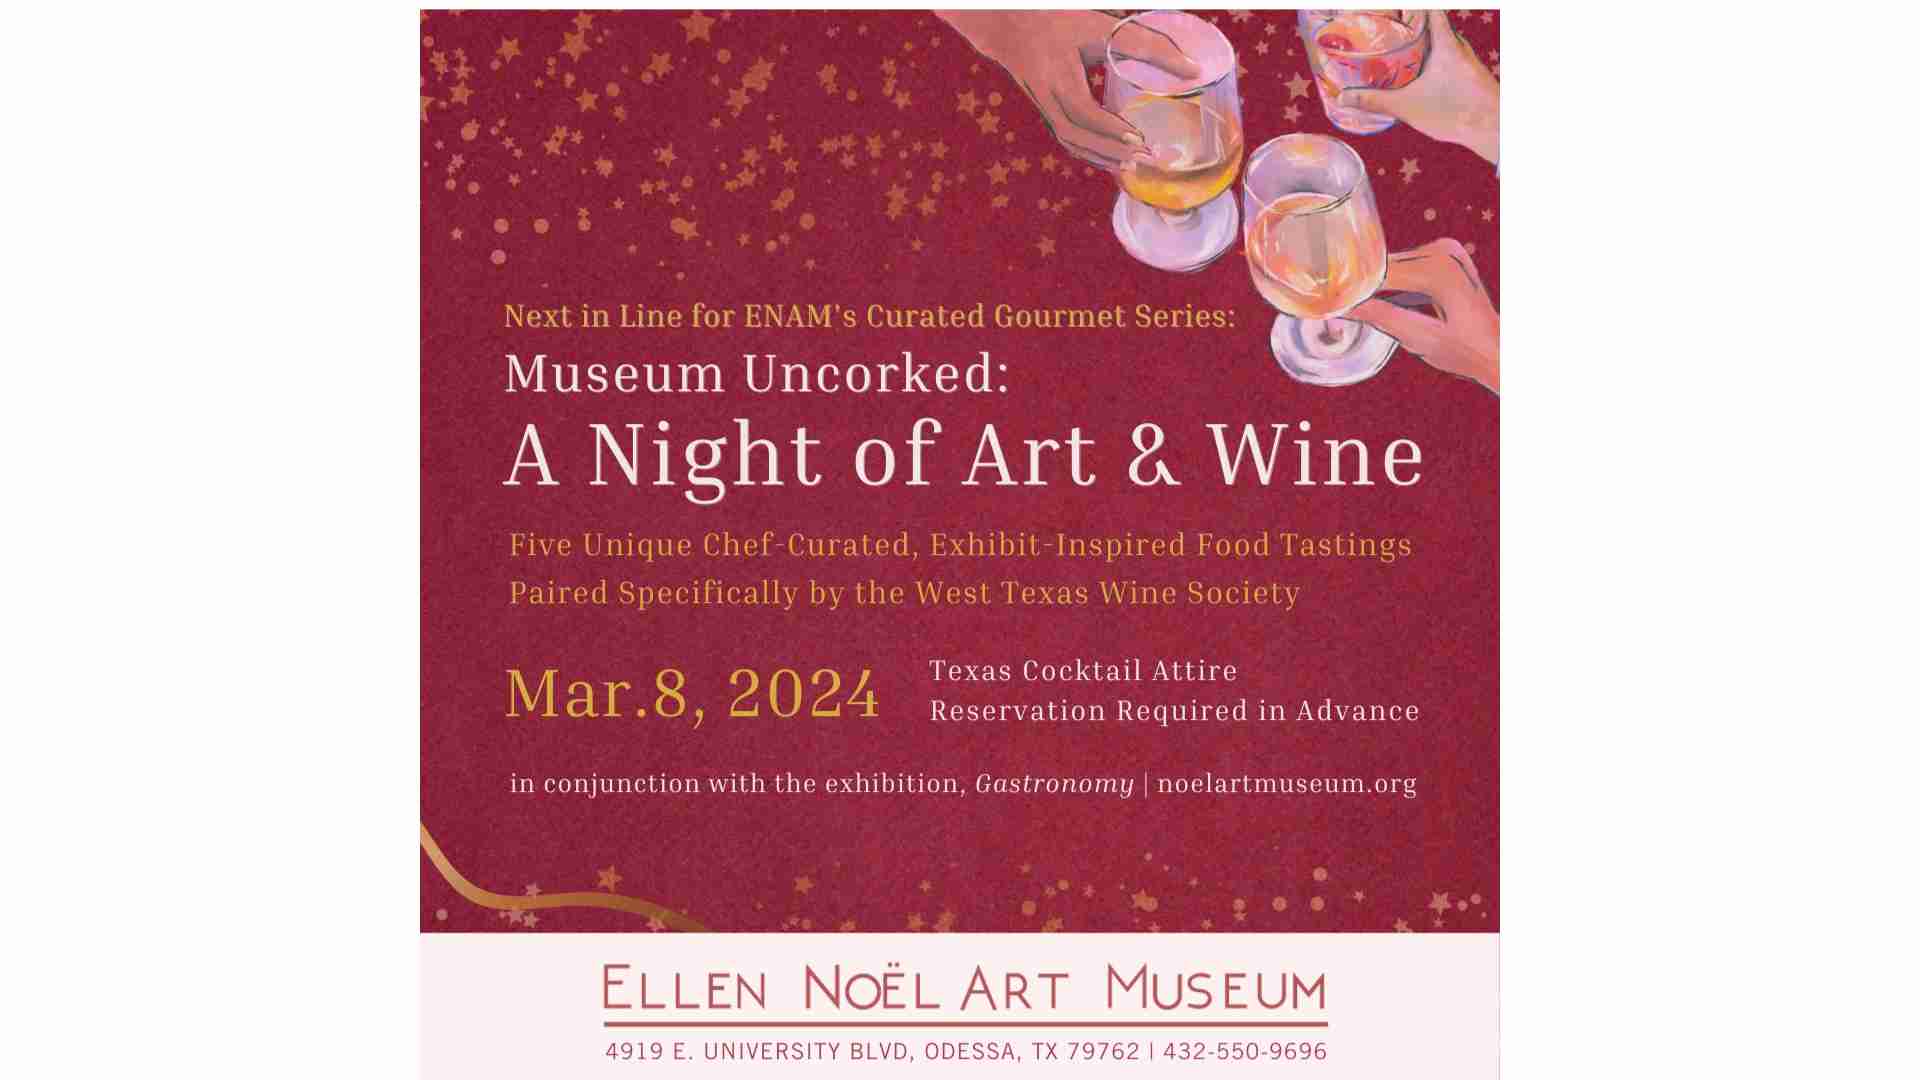 A Night of Art & Wine at Ellen Noel Art Museum